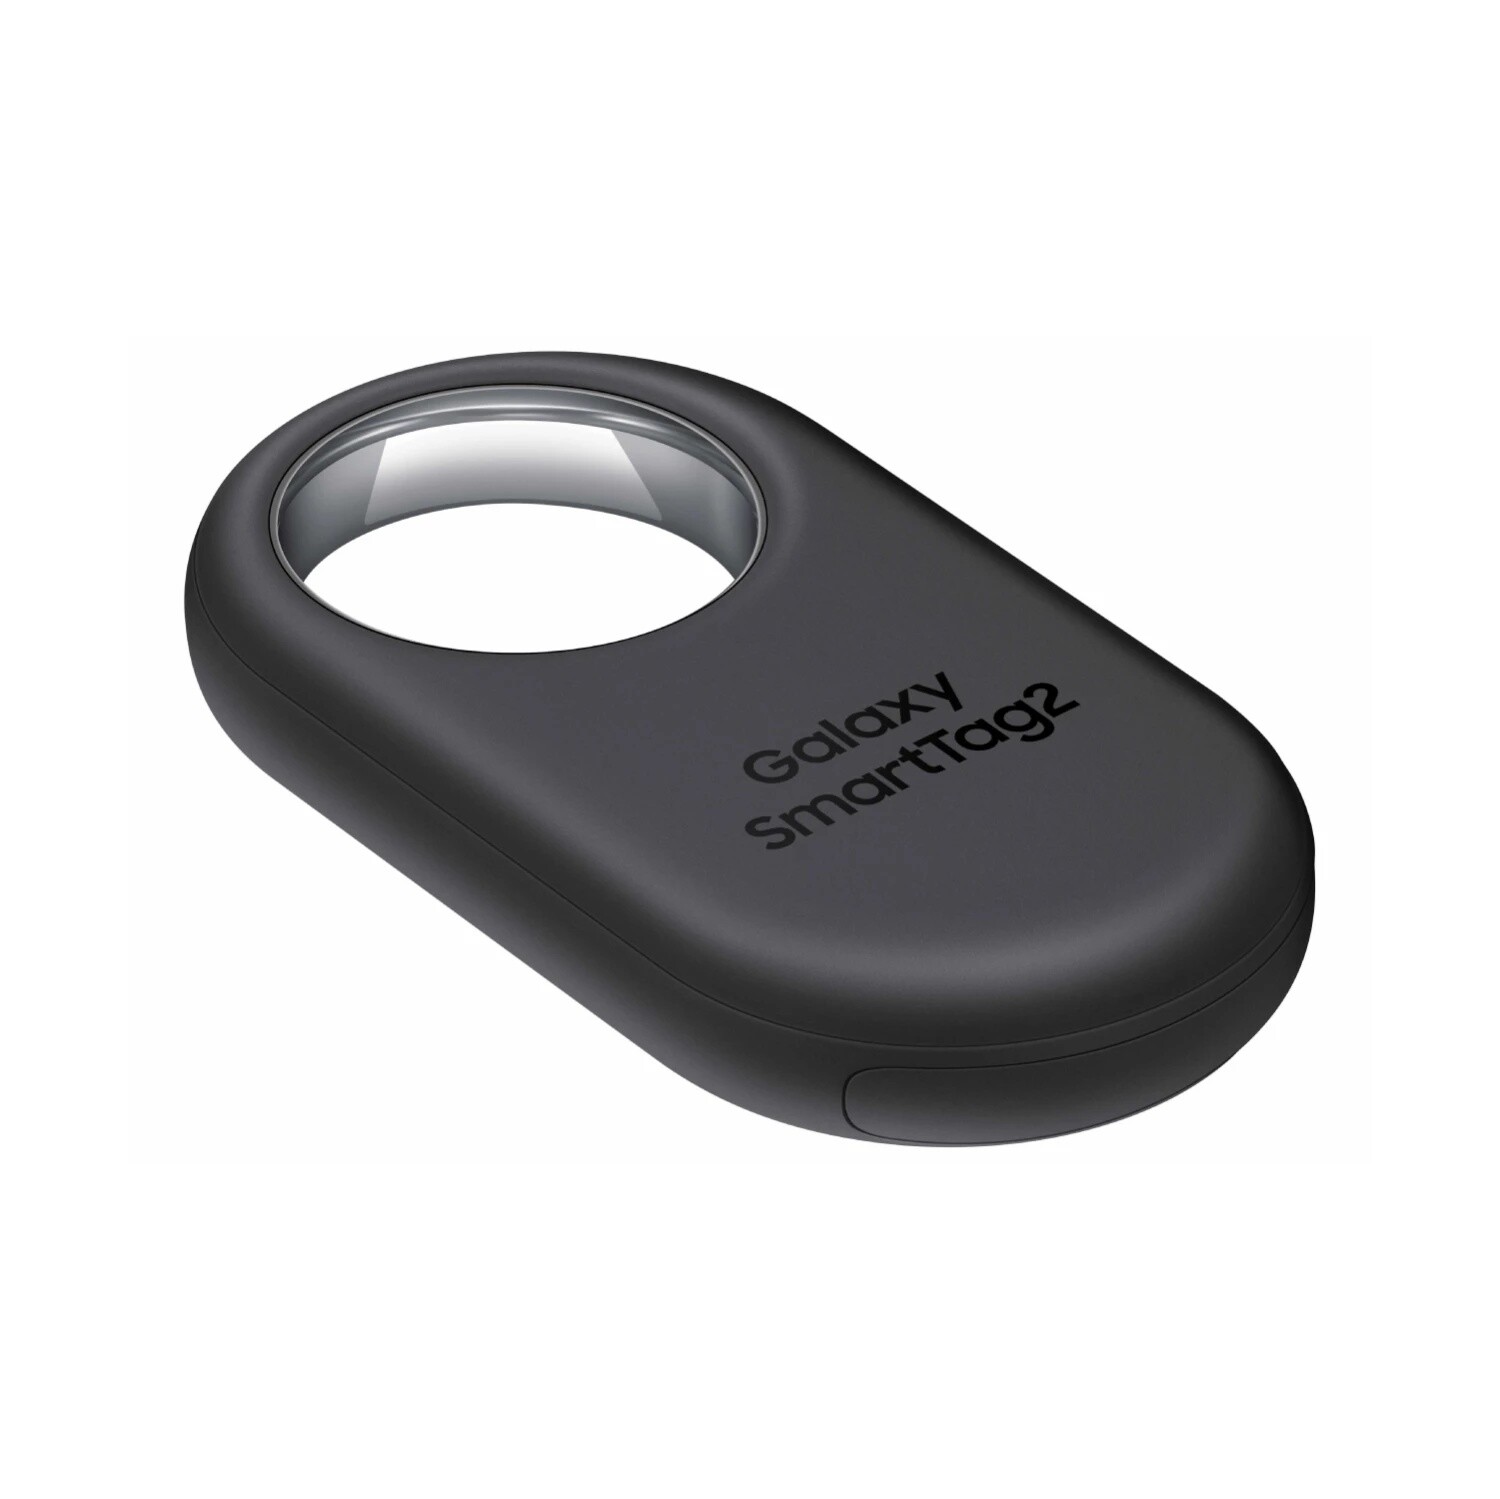  SAMSUNG Galaxy SmartTag (2 Pack) Bluetooth Tracker